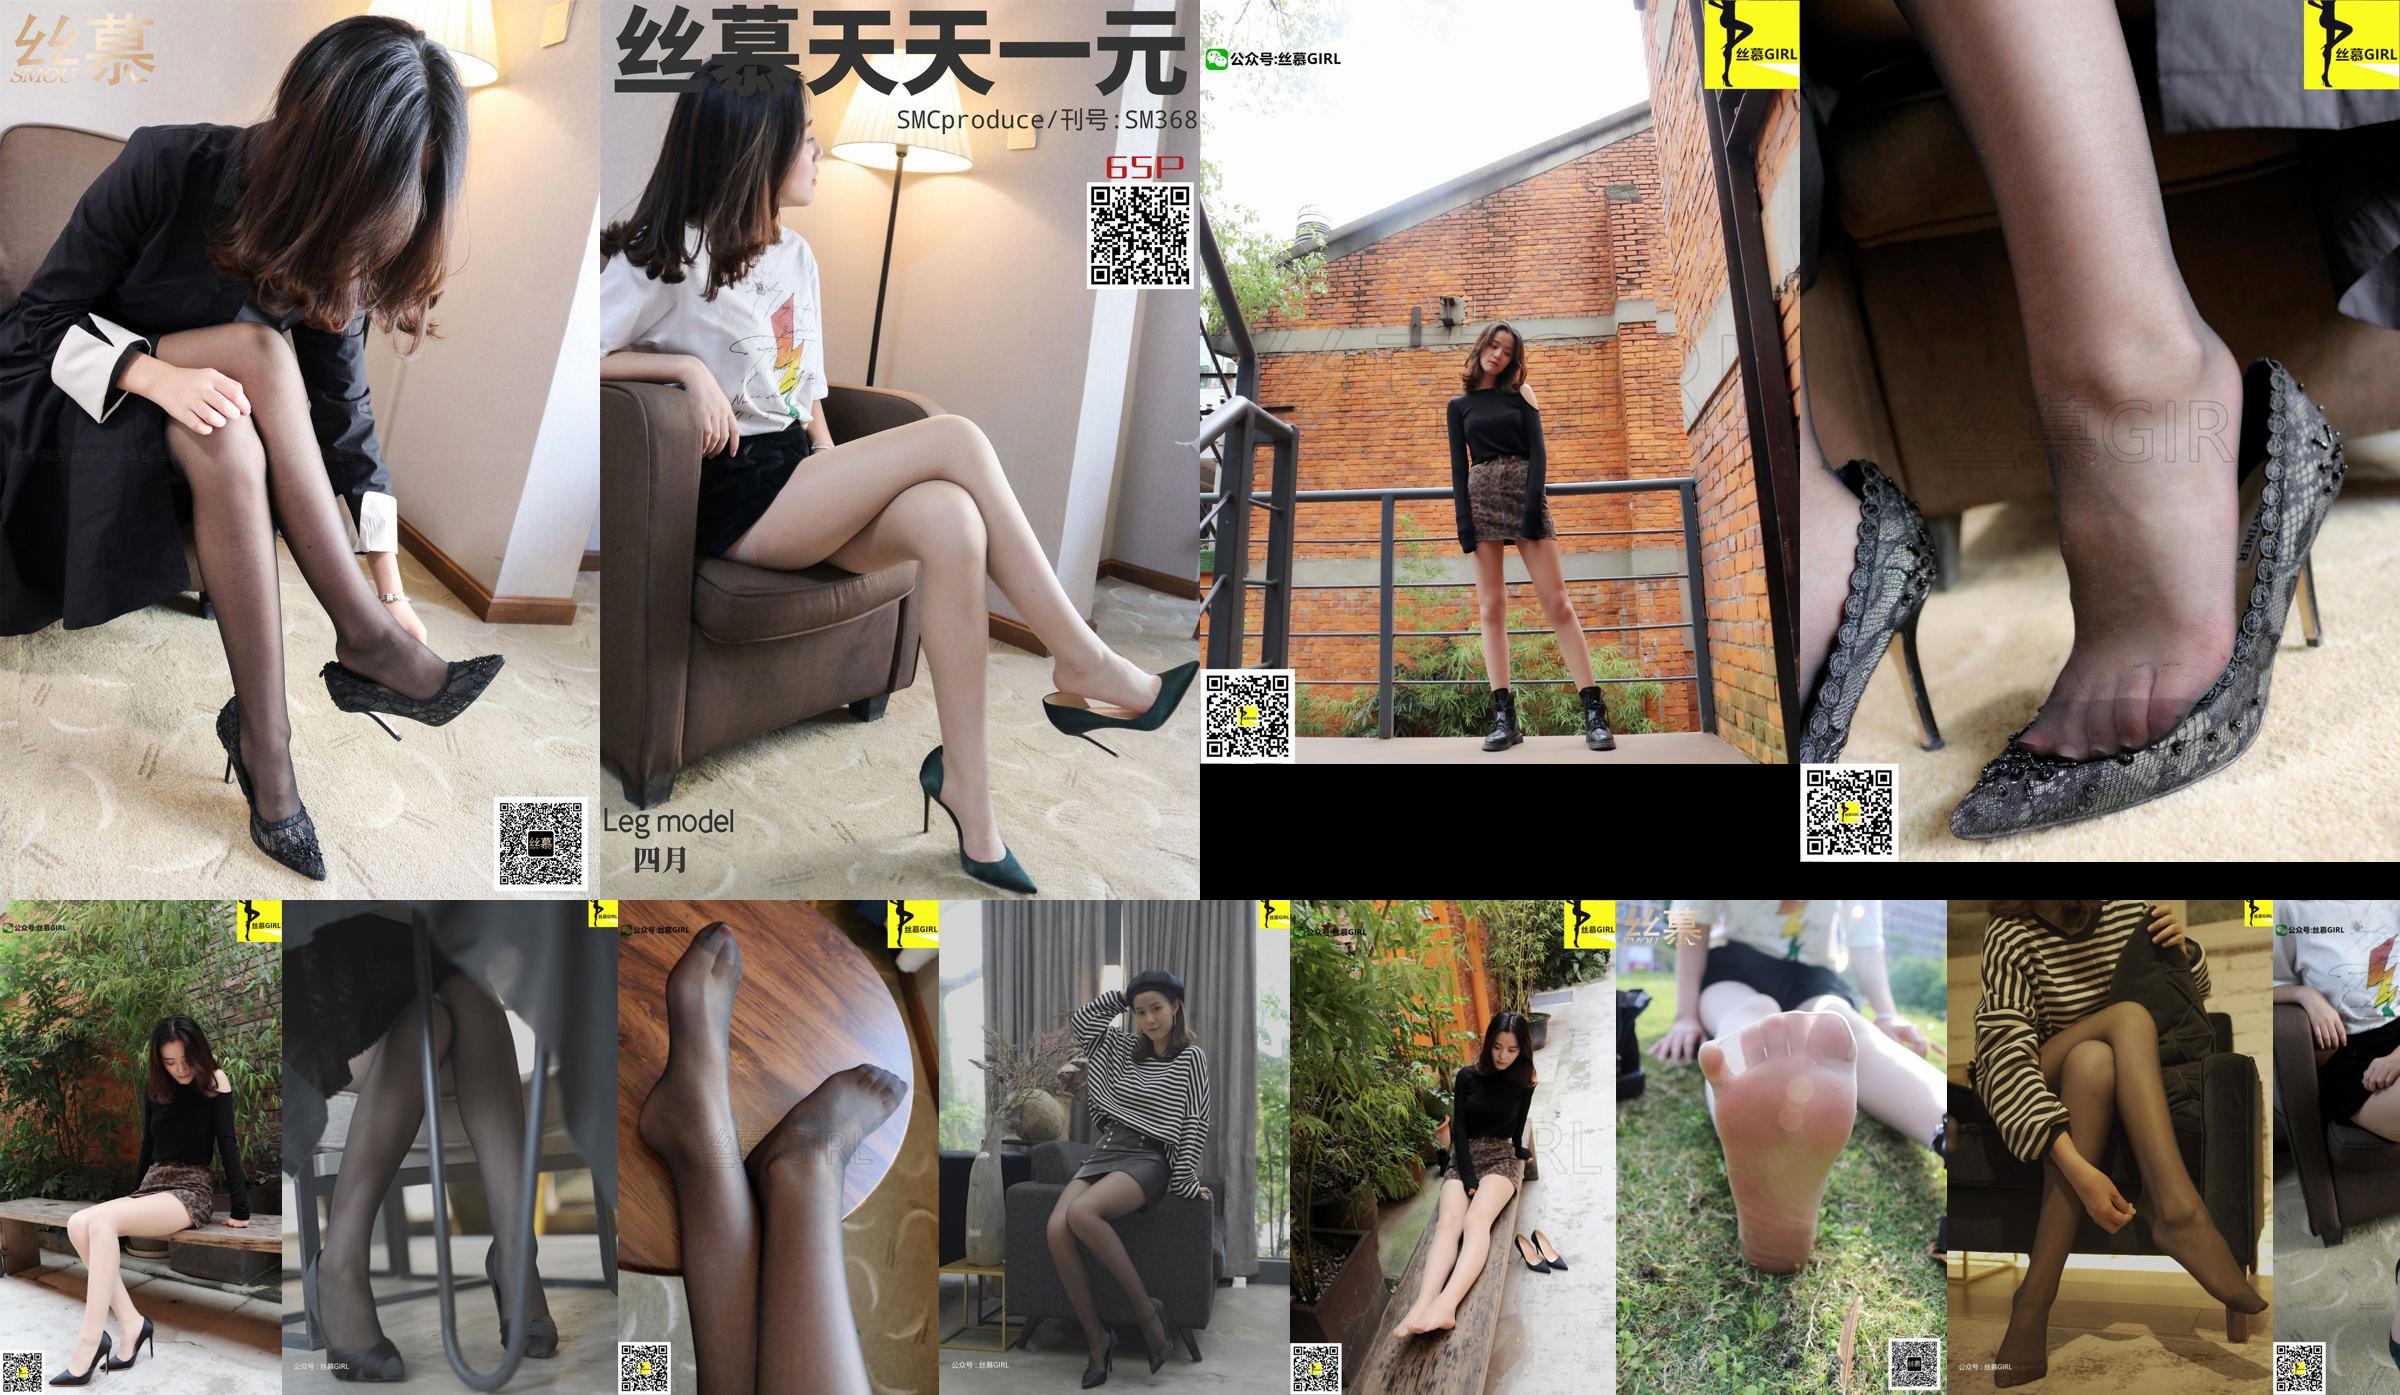 [Simu] SM368 Elke dag één Yuan april "Double Silk Review" No.6f8afe Pagina 1